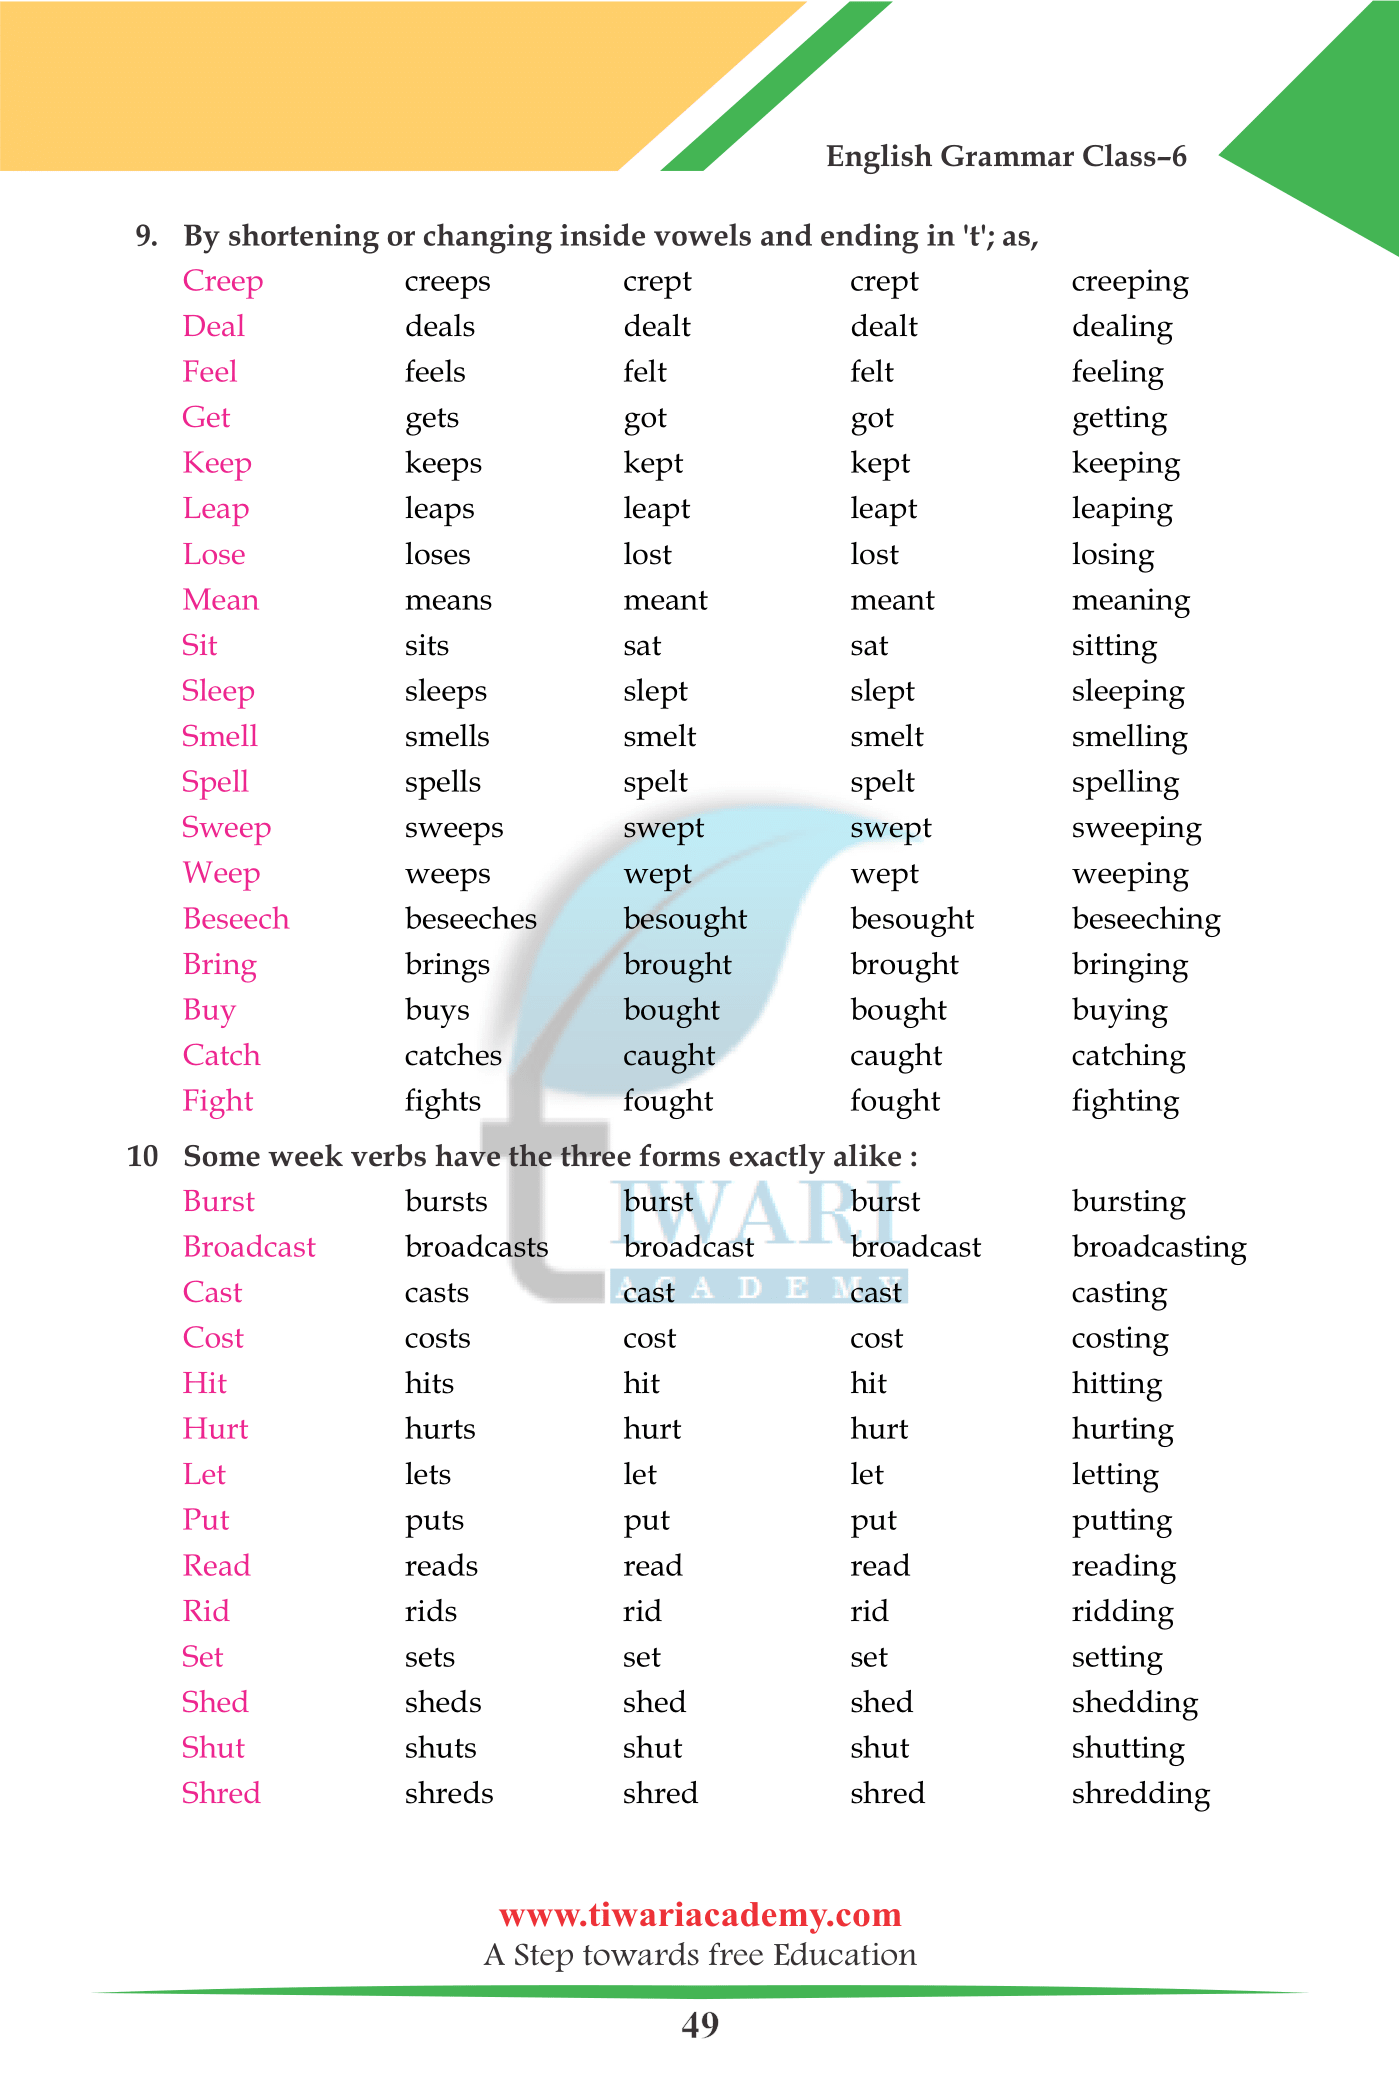 6th English Grammar: Verb Forms